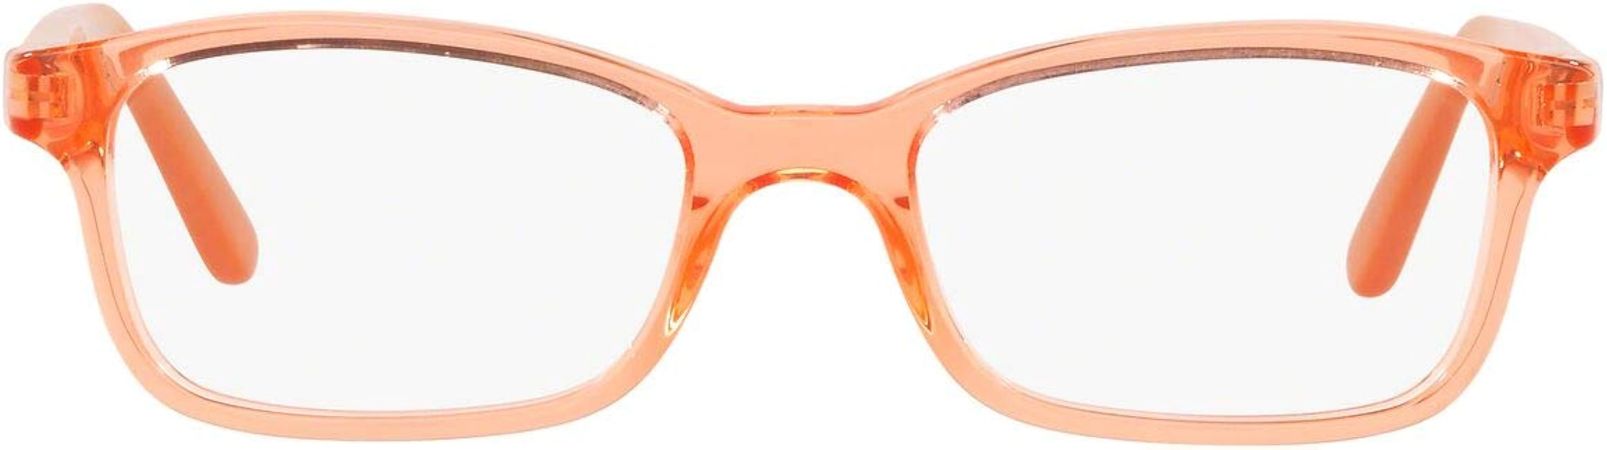 Amazon.com: Vogue Eyewear Vo5070 Square Prescription Eyeglass Frames, Transparent Orange/Demo Lens, 46 mm : Clothing, Shoes & Jewelry